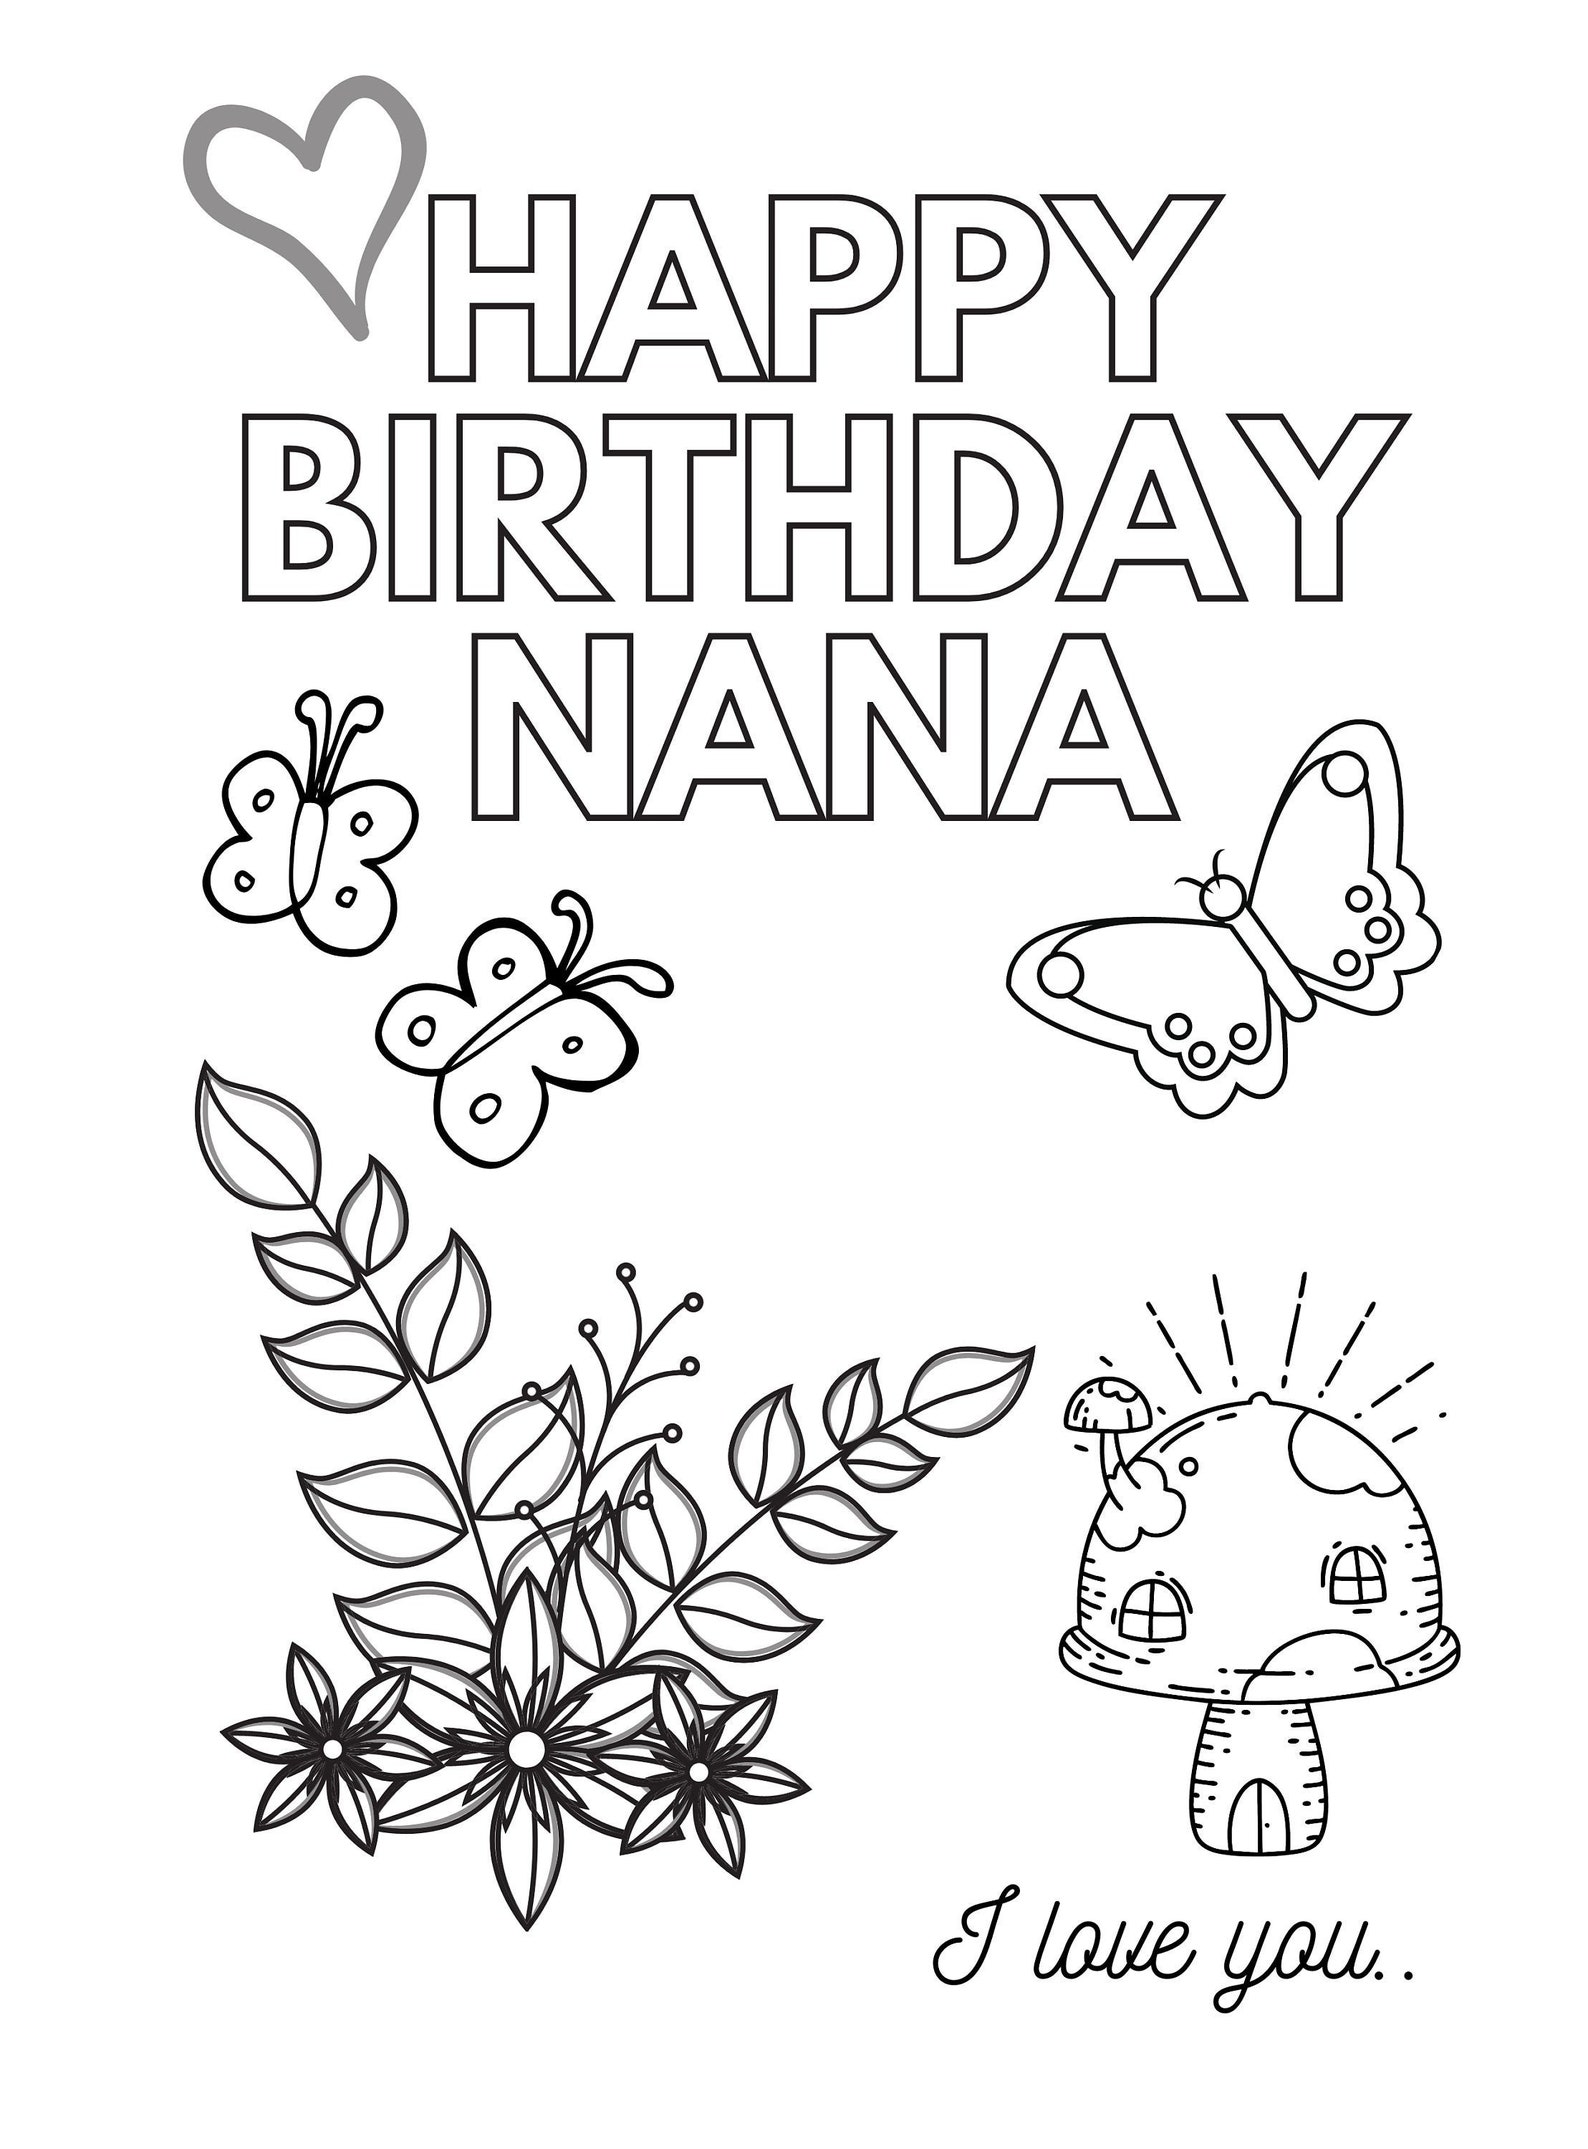 Free Printable Birthday Cards For Nana